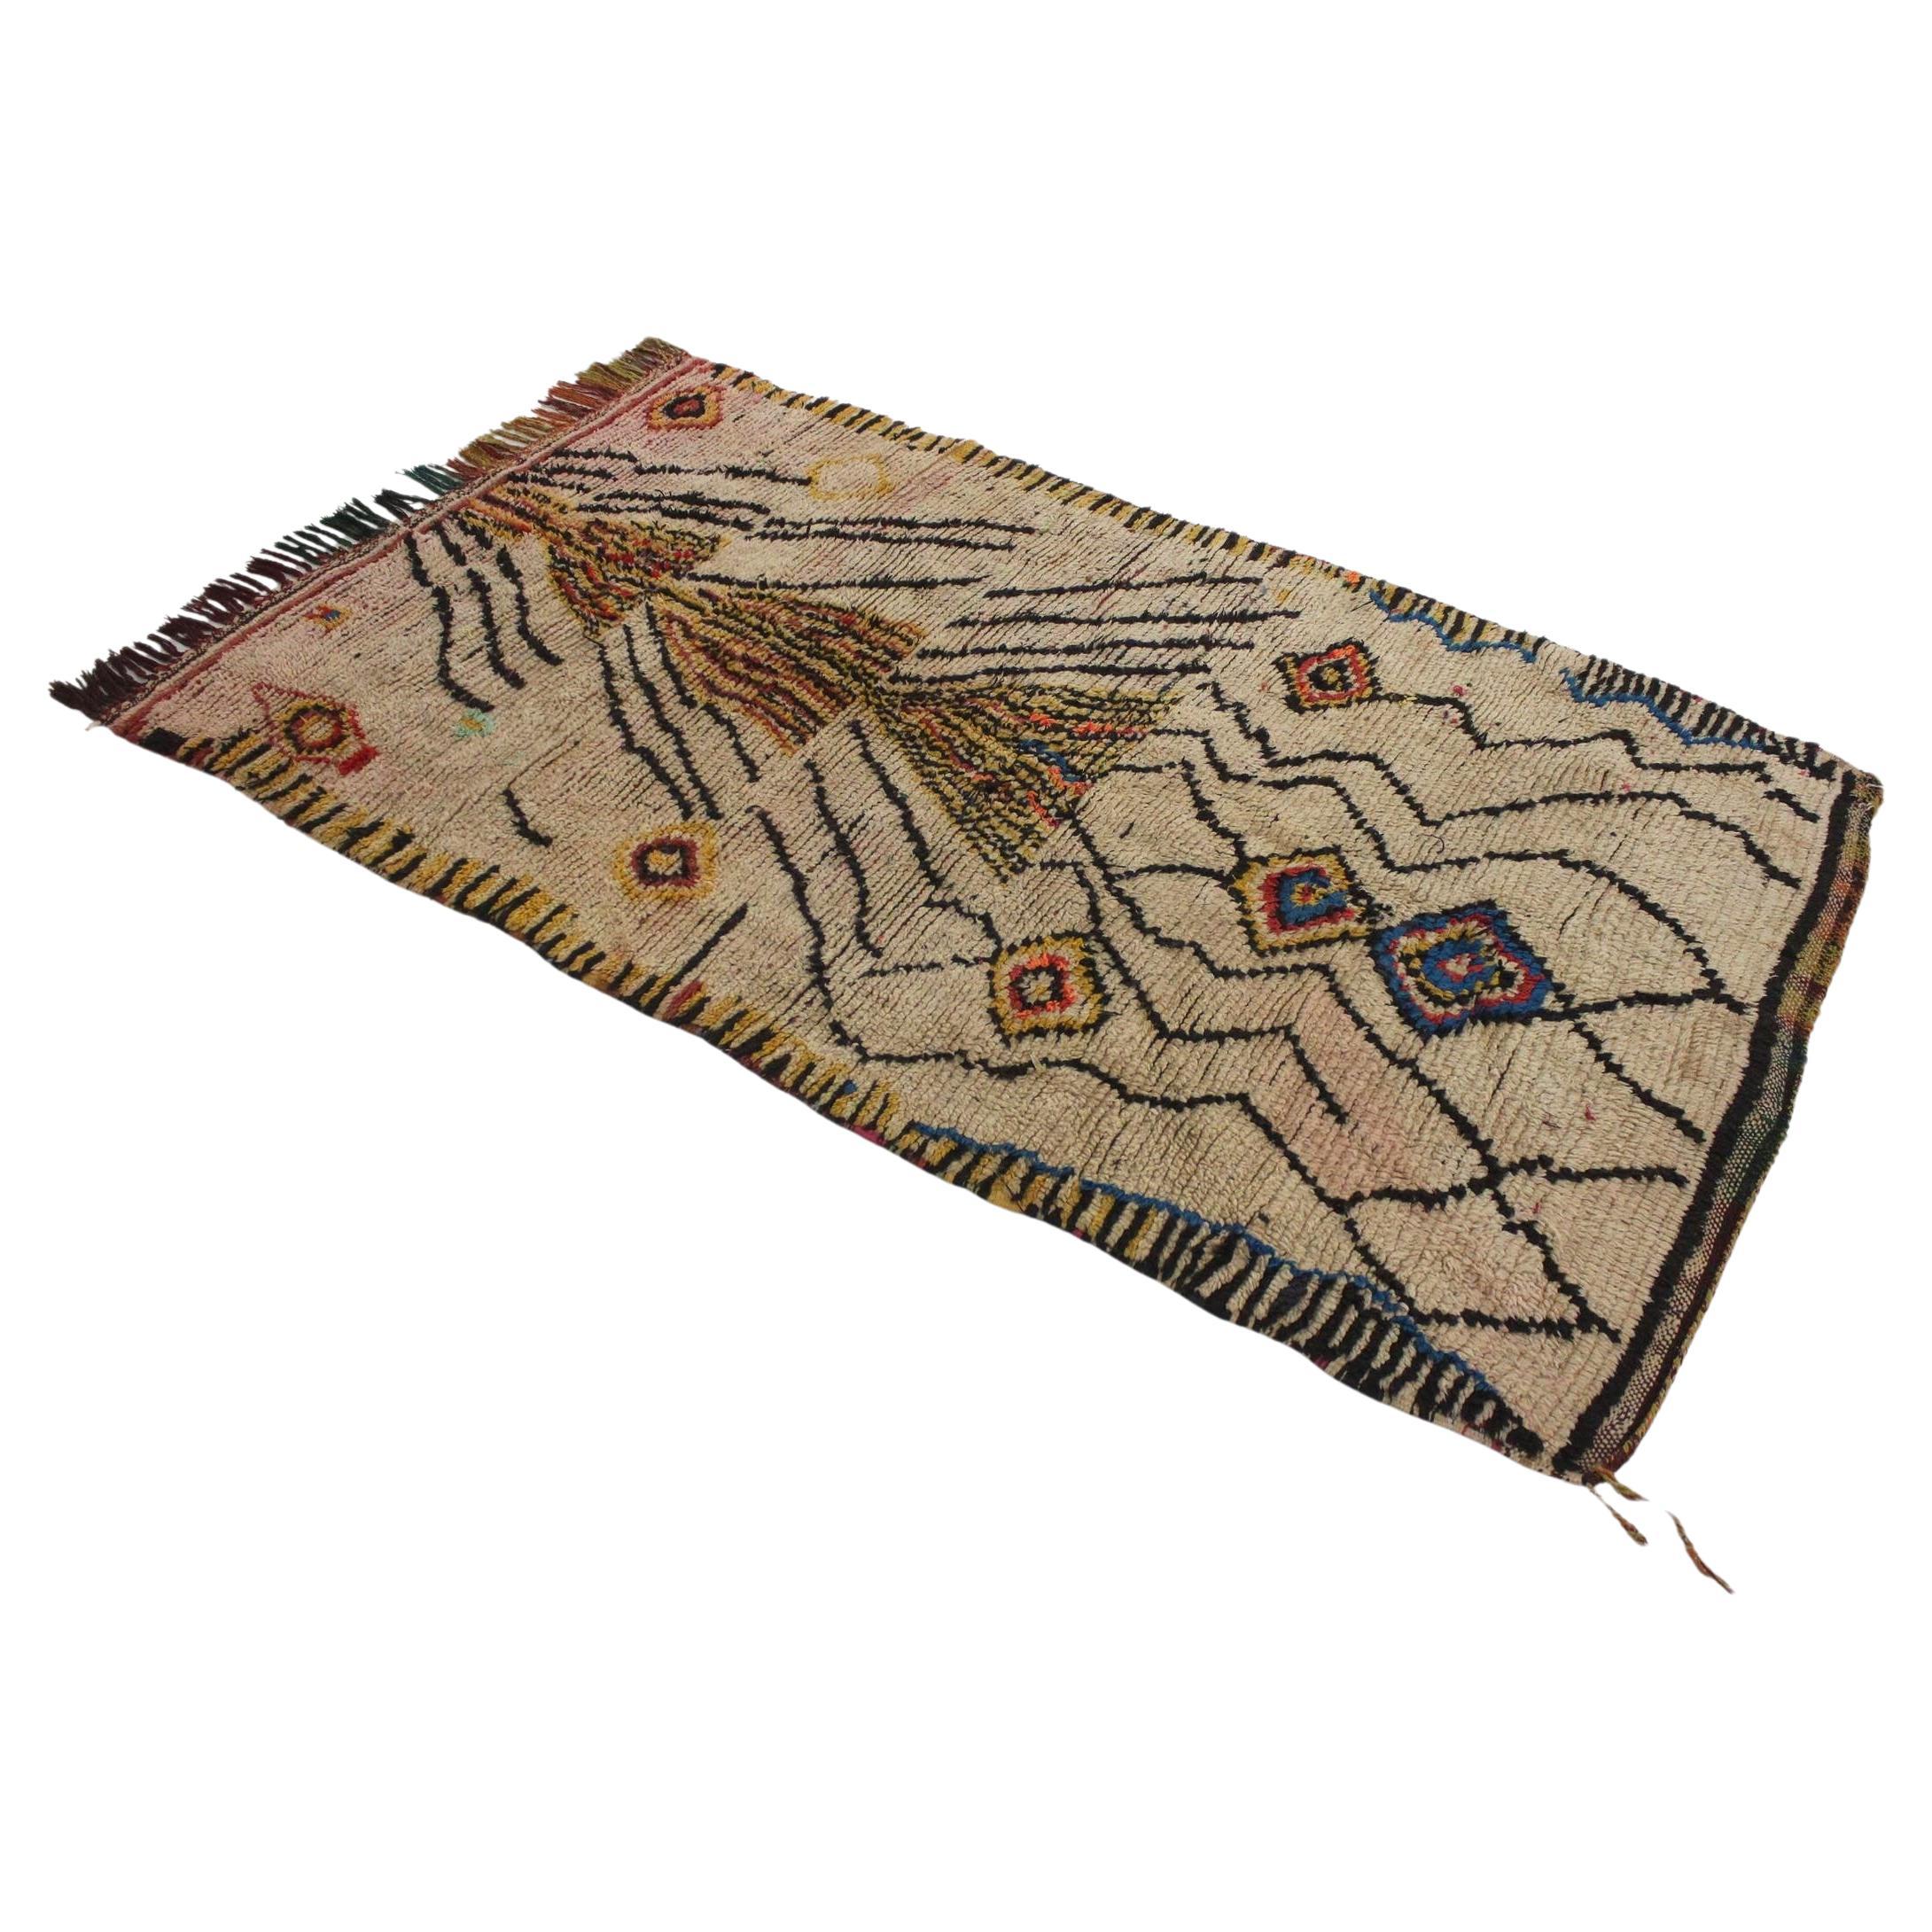 Vintage Moroccan Azilal rug - Beige/yellow - 3.9x6.7feet / 120x206cm